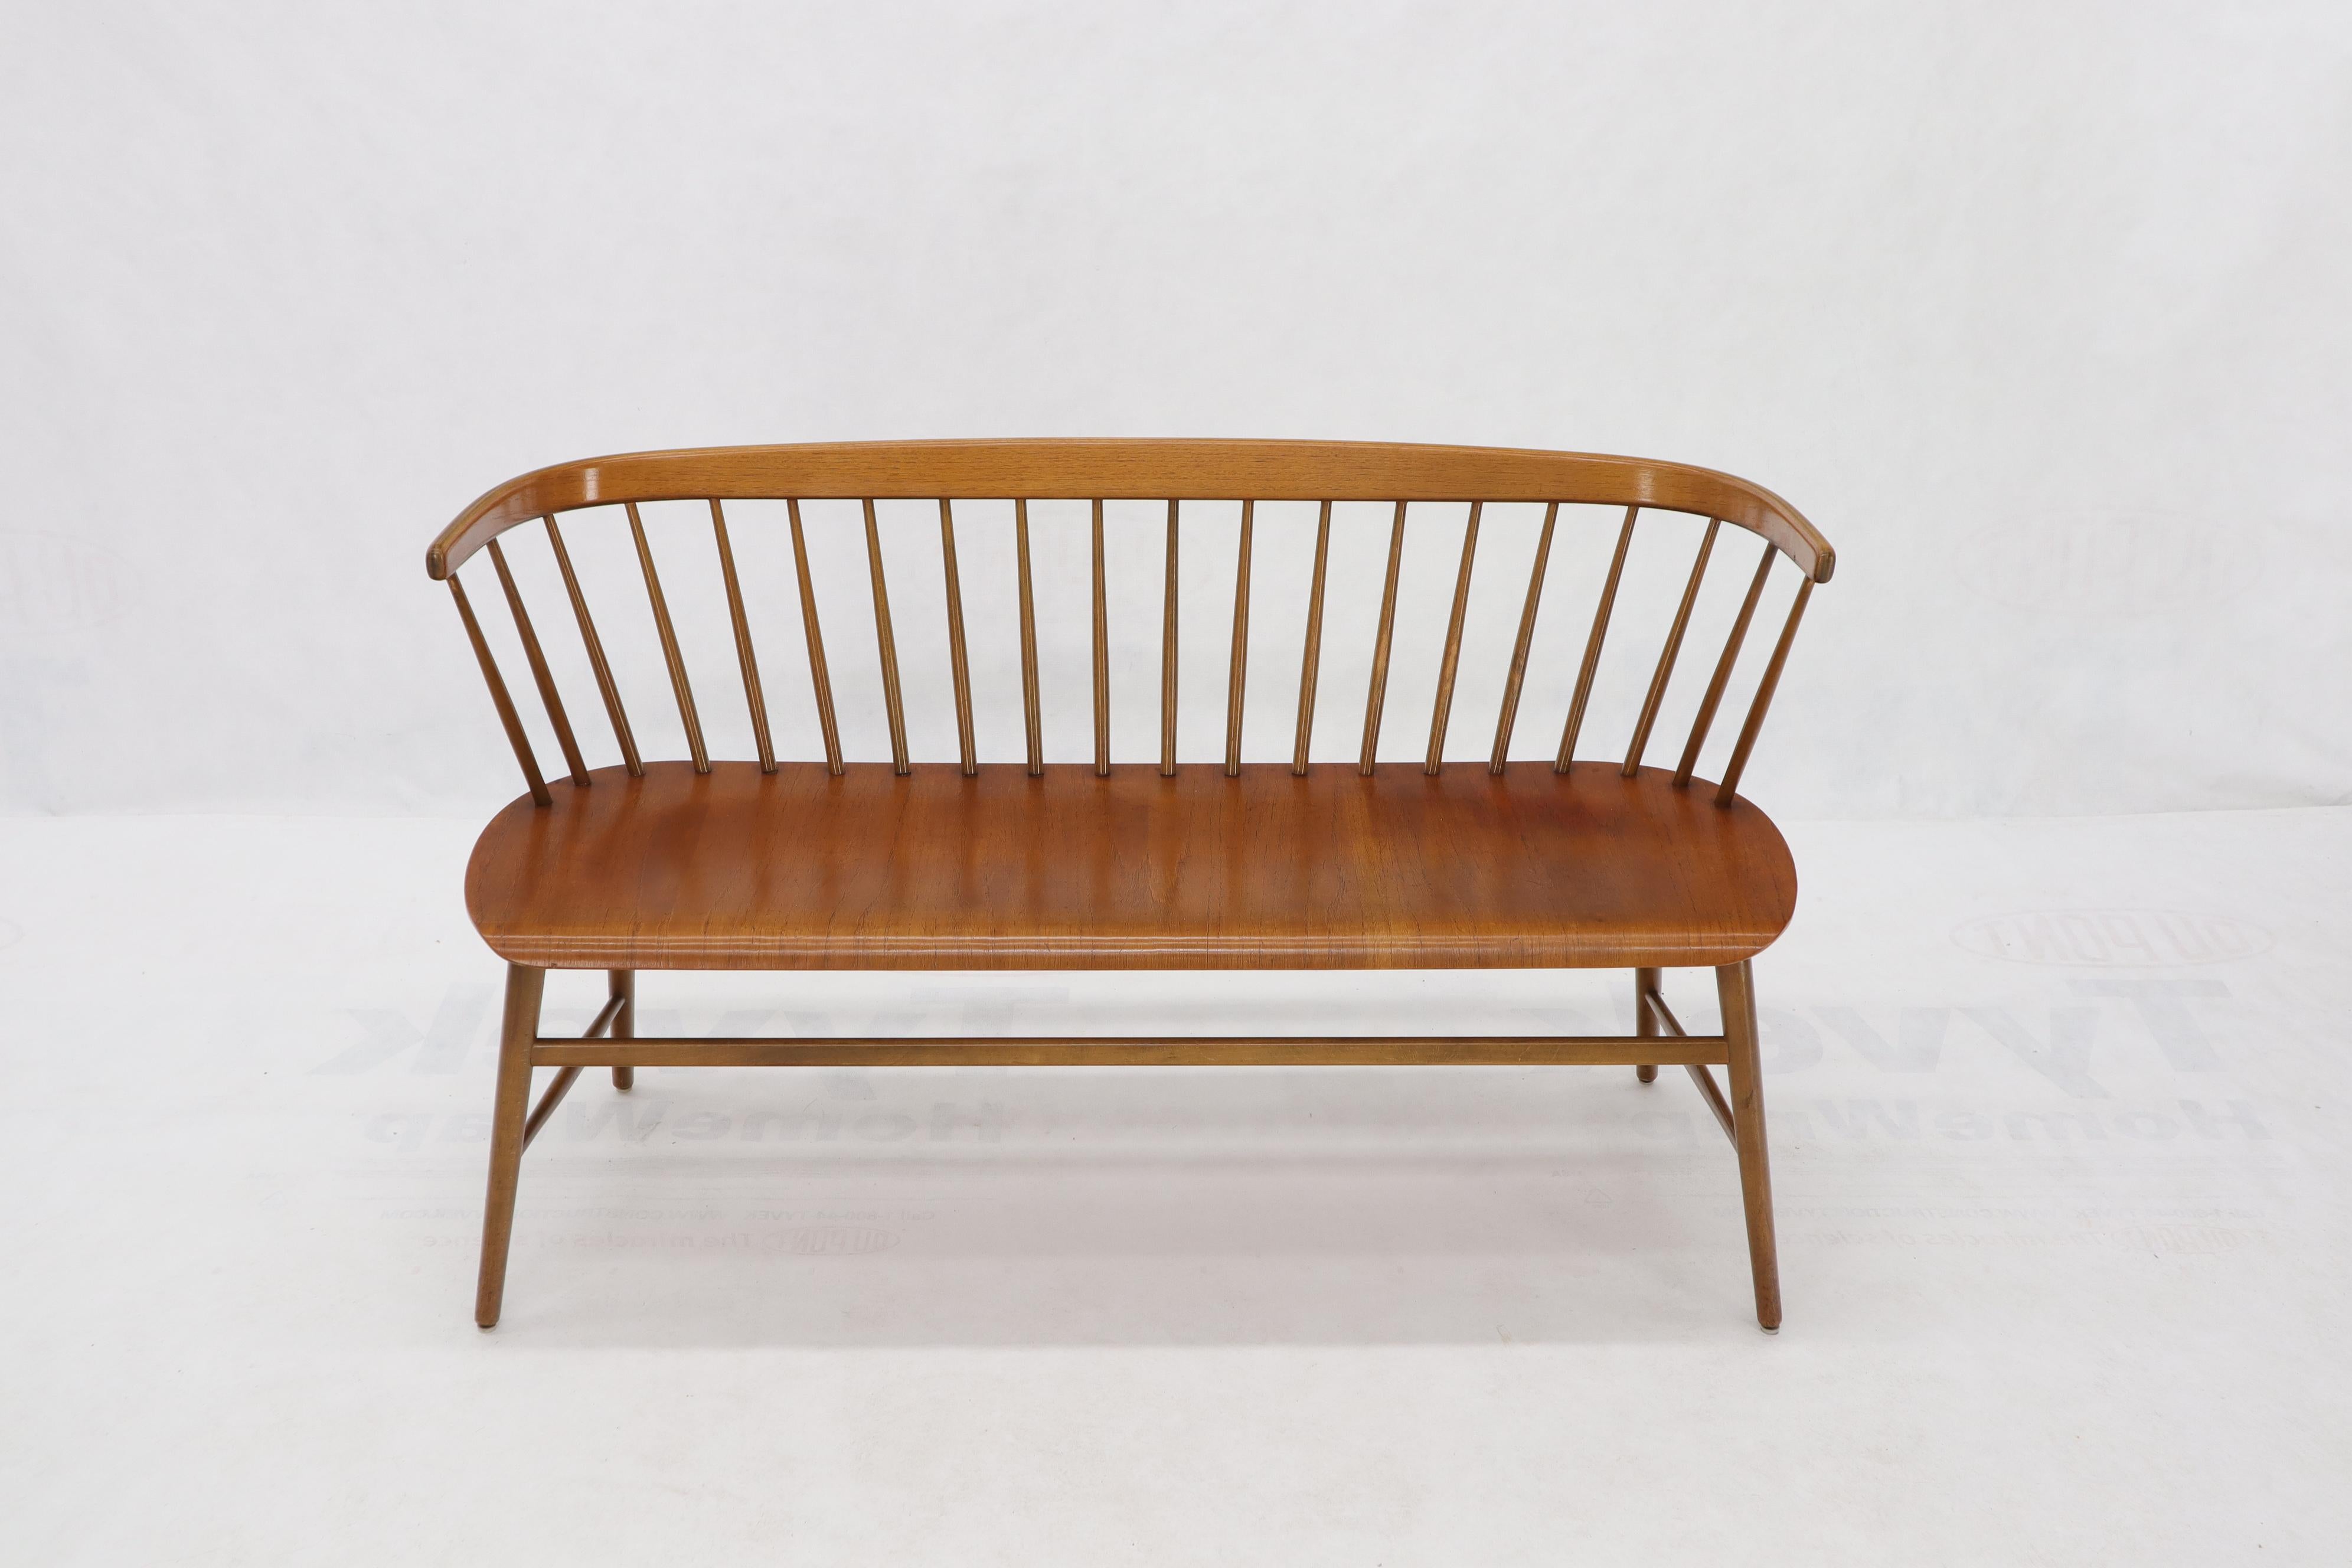 Danish Mid-Century Modern bend teak wood back molded seat settee bench. Hans Werner decor match.